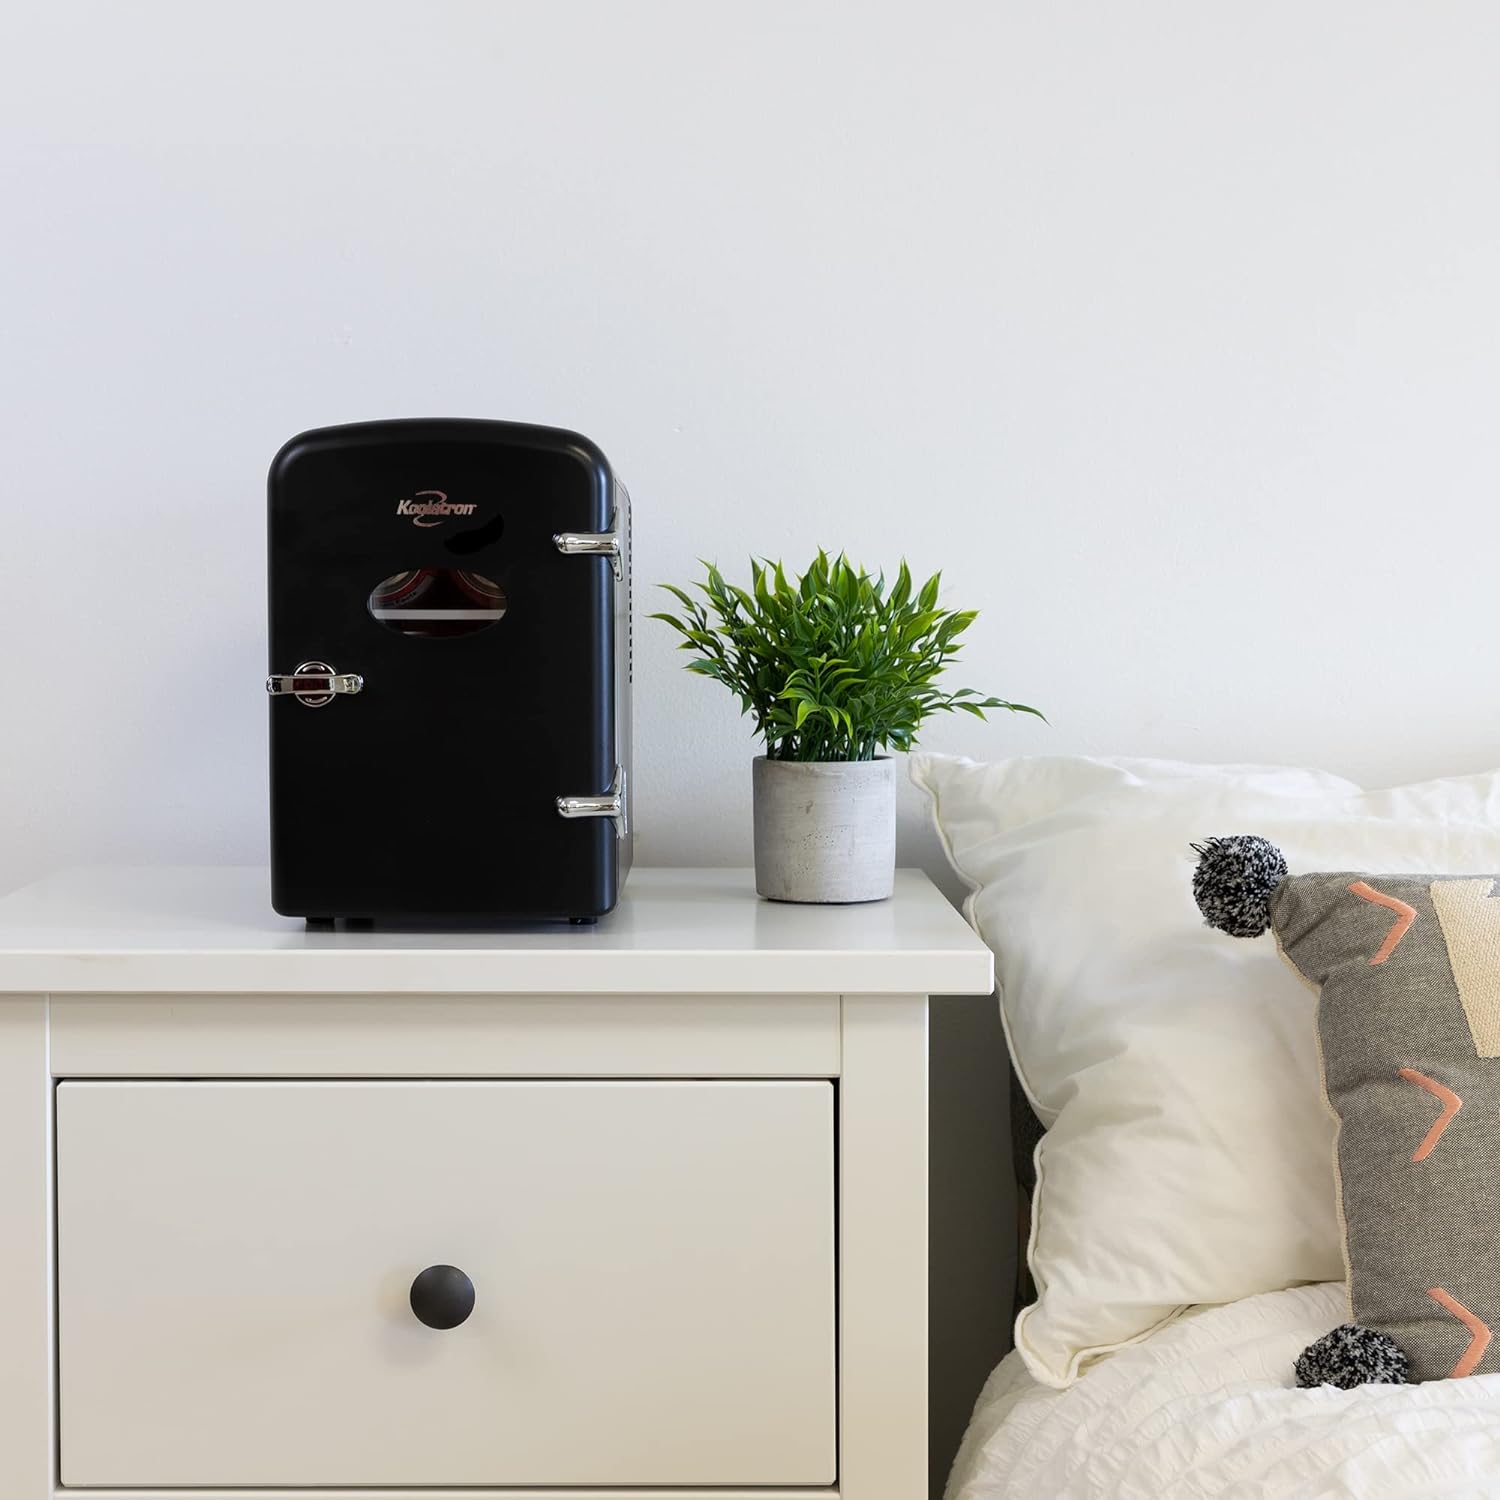 Koolatron Retro 4L 6 Can Portable Mini Fridge Compact Refrigerator for Bedroom (Black)- 4751